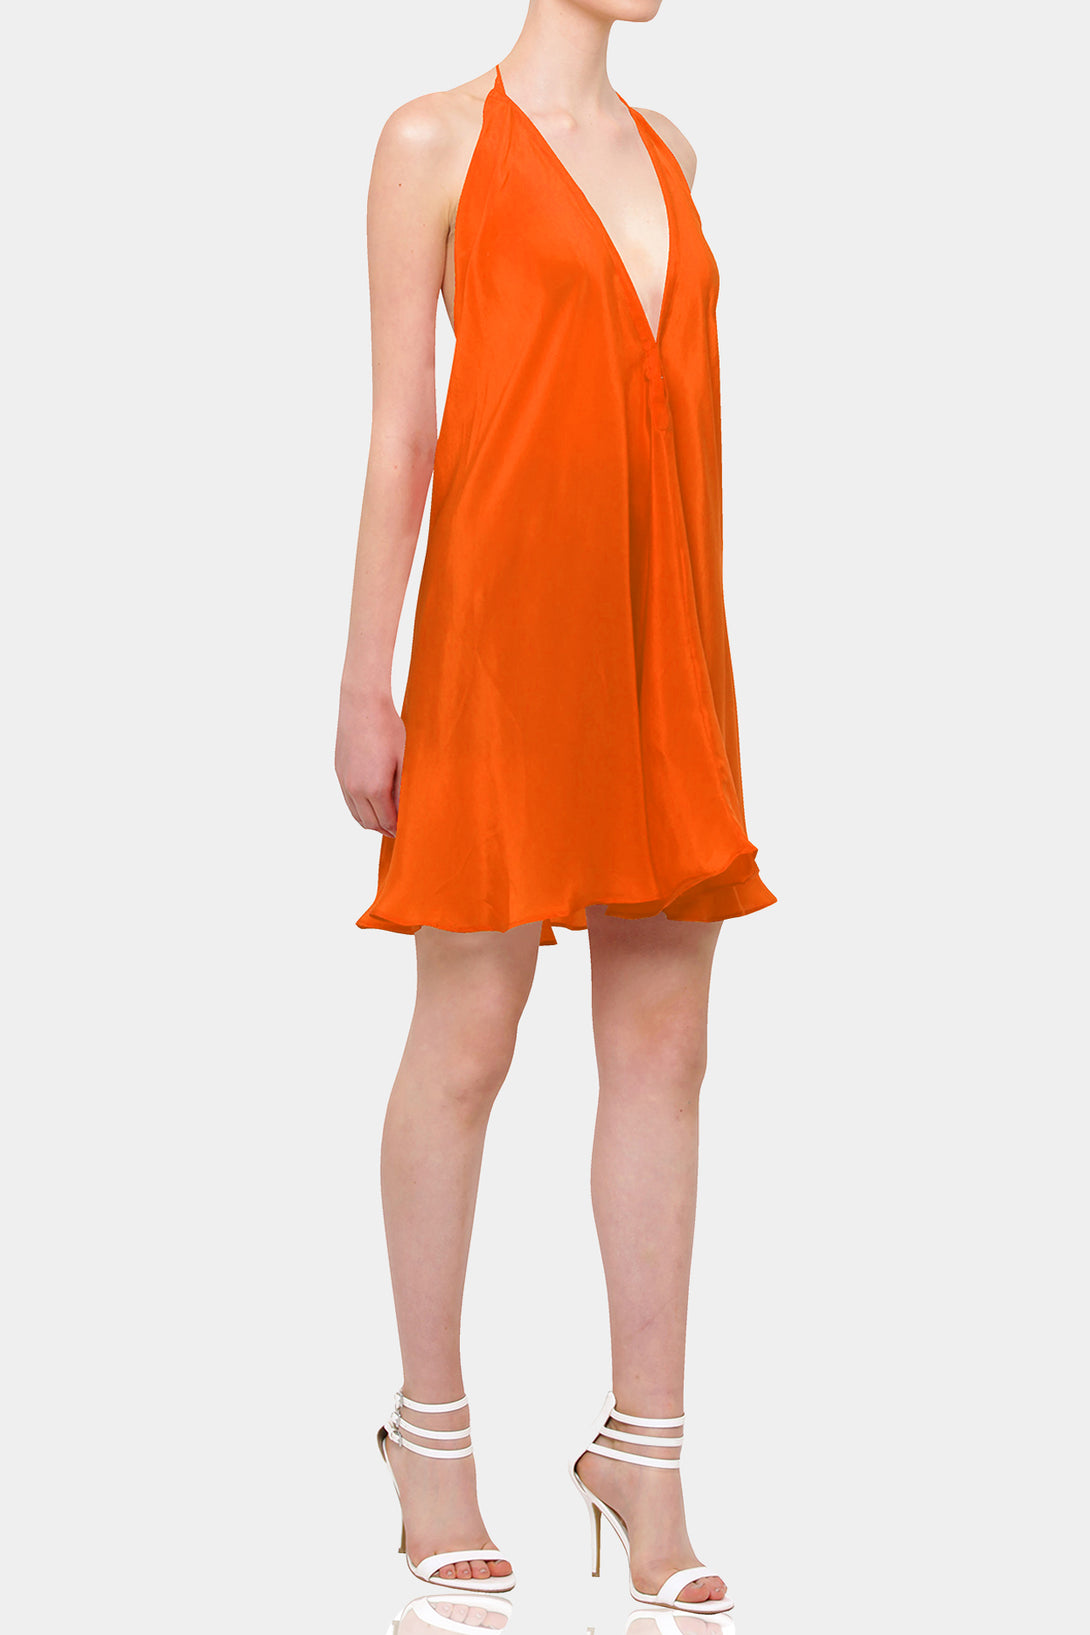  orange short dress, Shahida Parides, cute mini dresses, short sleeveless summer dresses,